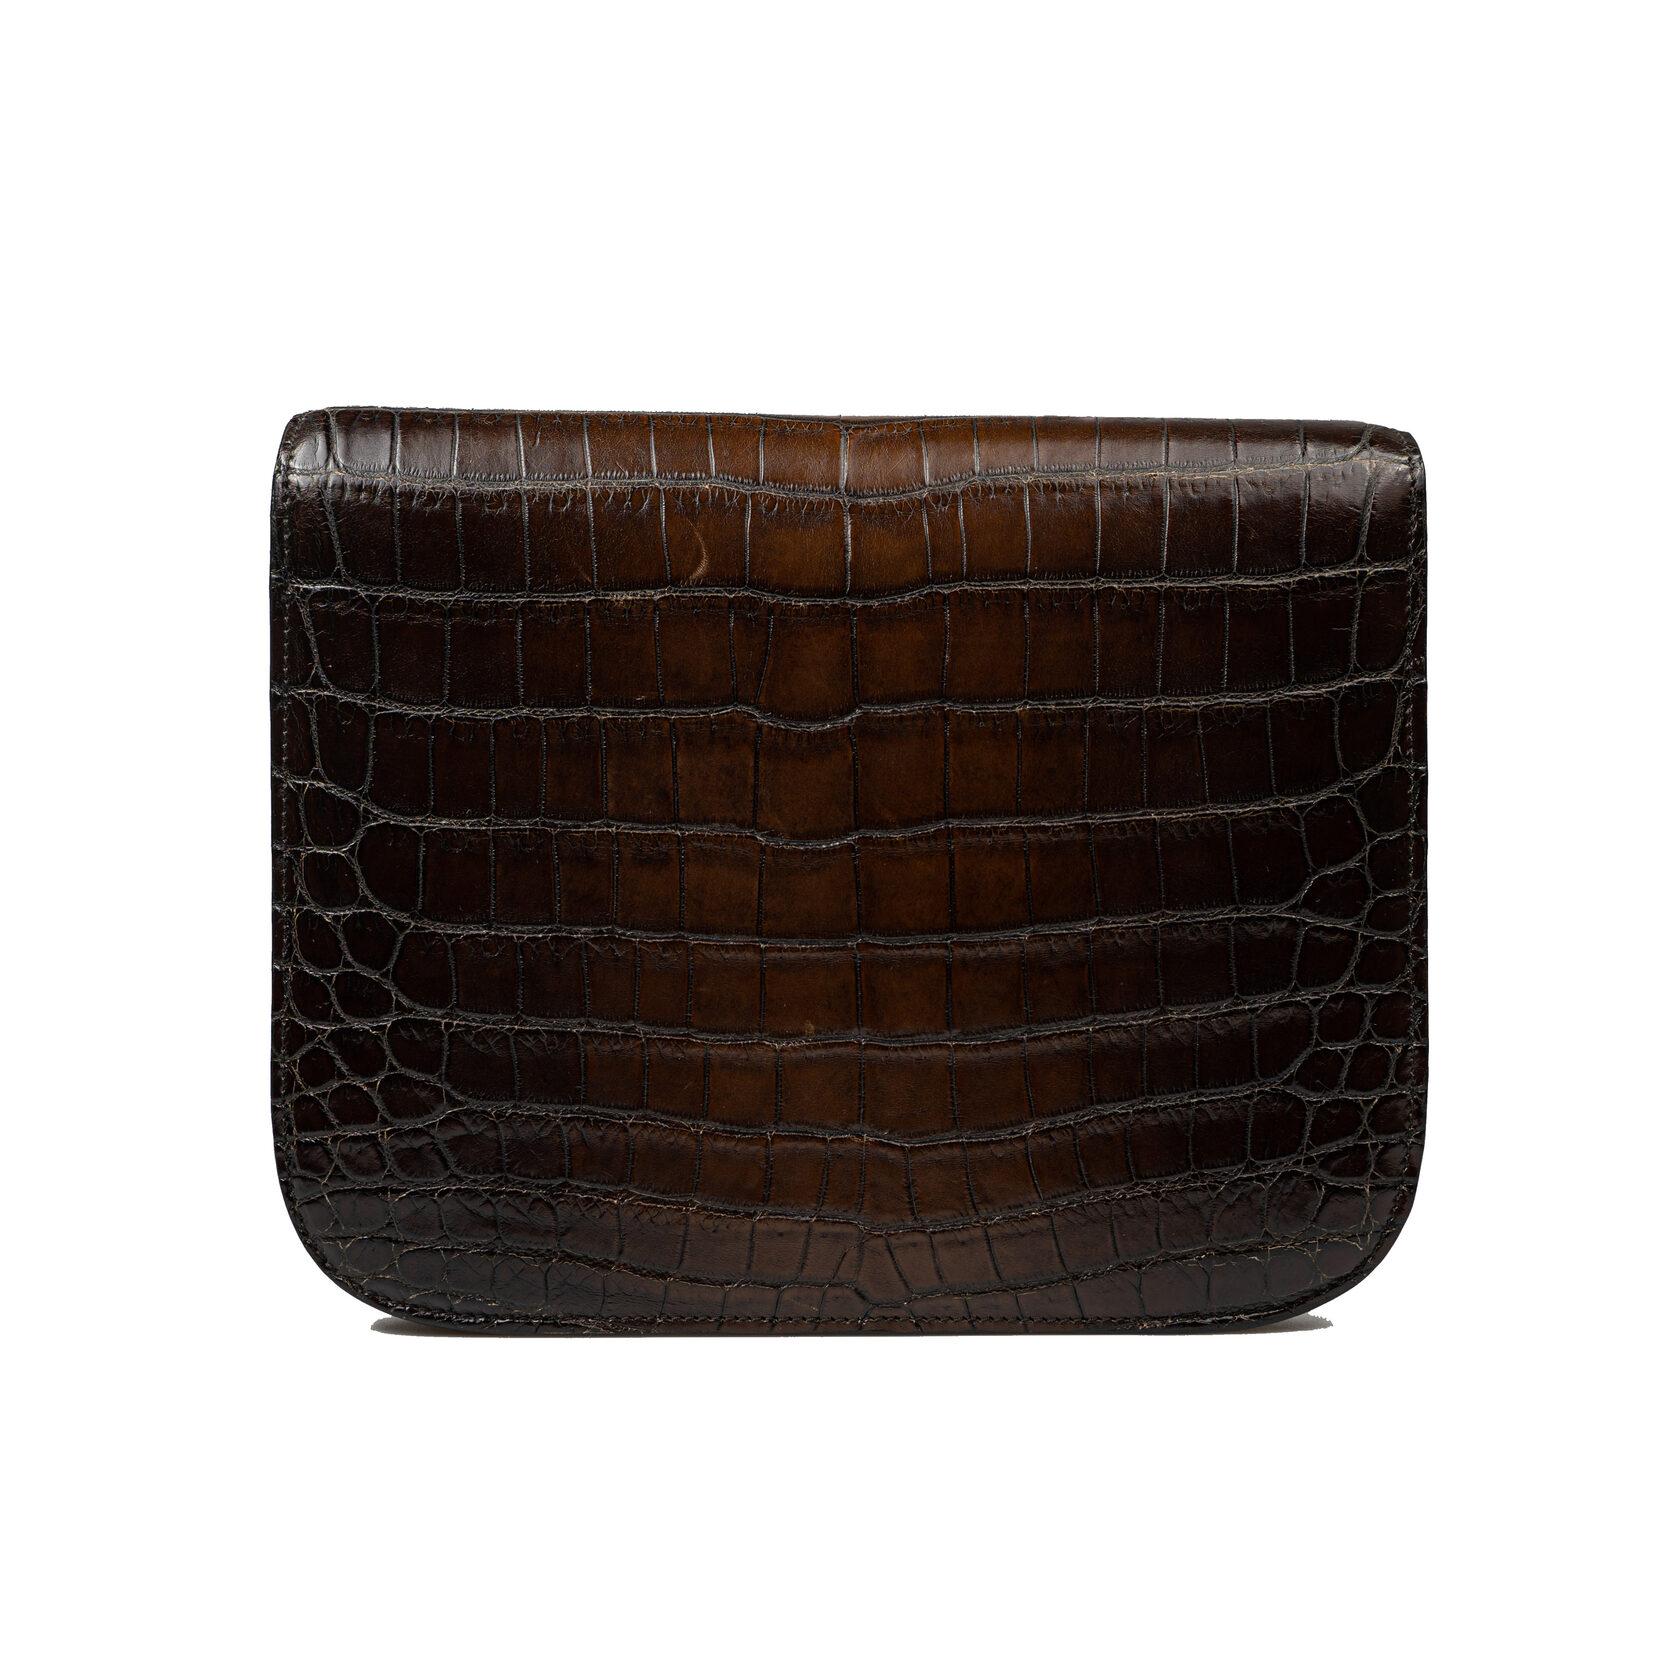 Celine Classic Box Medium in Crocodile Leather In Excellent Condition For Sale In Dover, DE